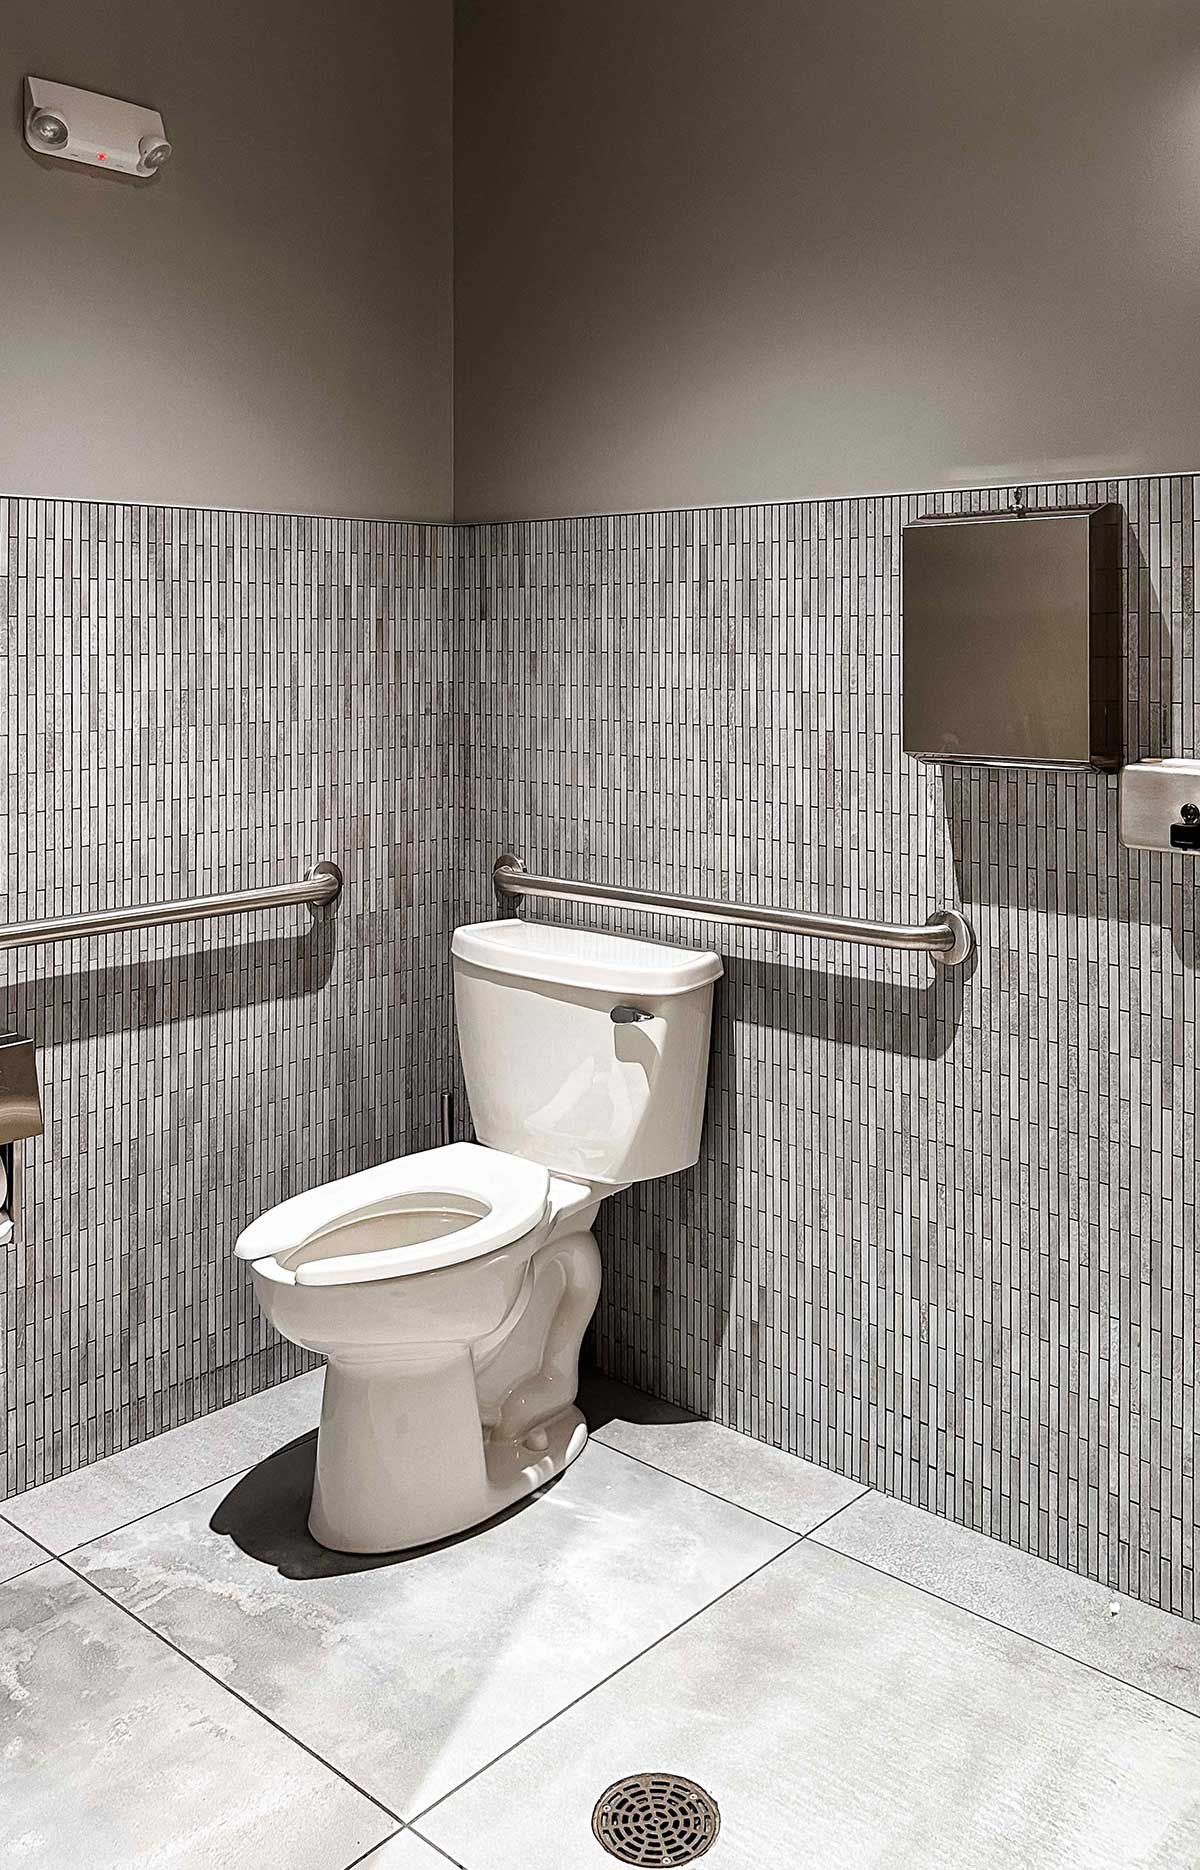 Gorman Bunch Ortho restroom